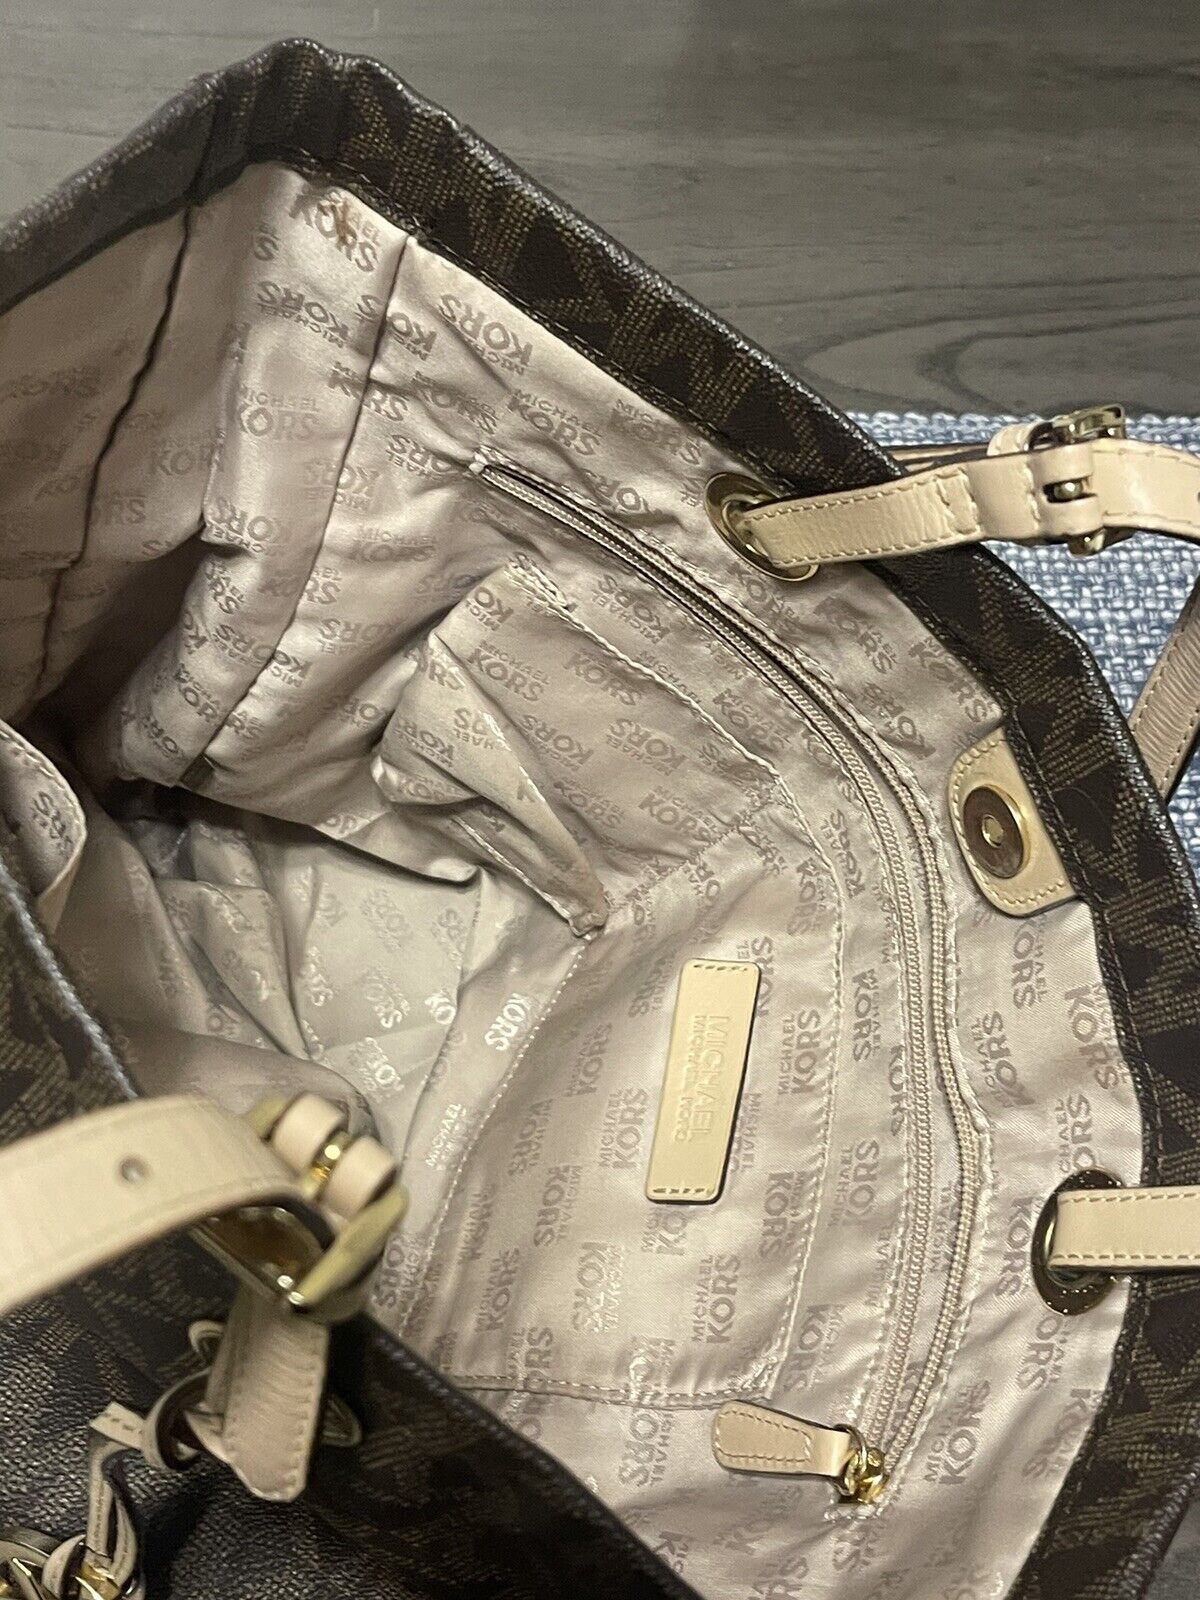 Eva Large Two-Tone Graphic Logo Tote Bag – Michael Kors Pre-Loved